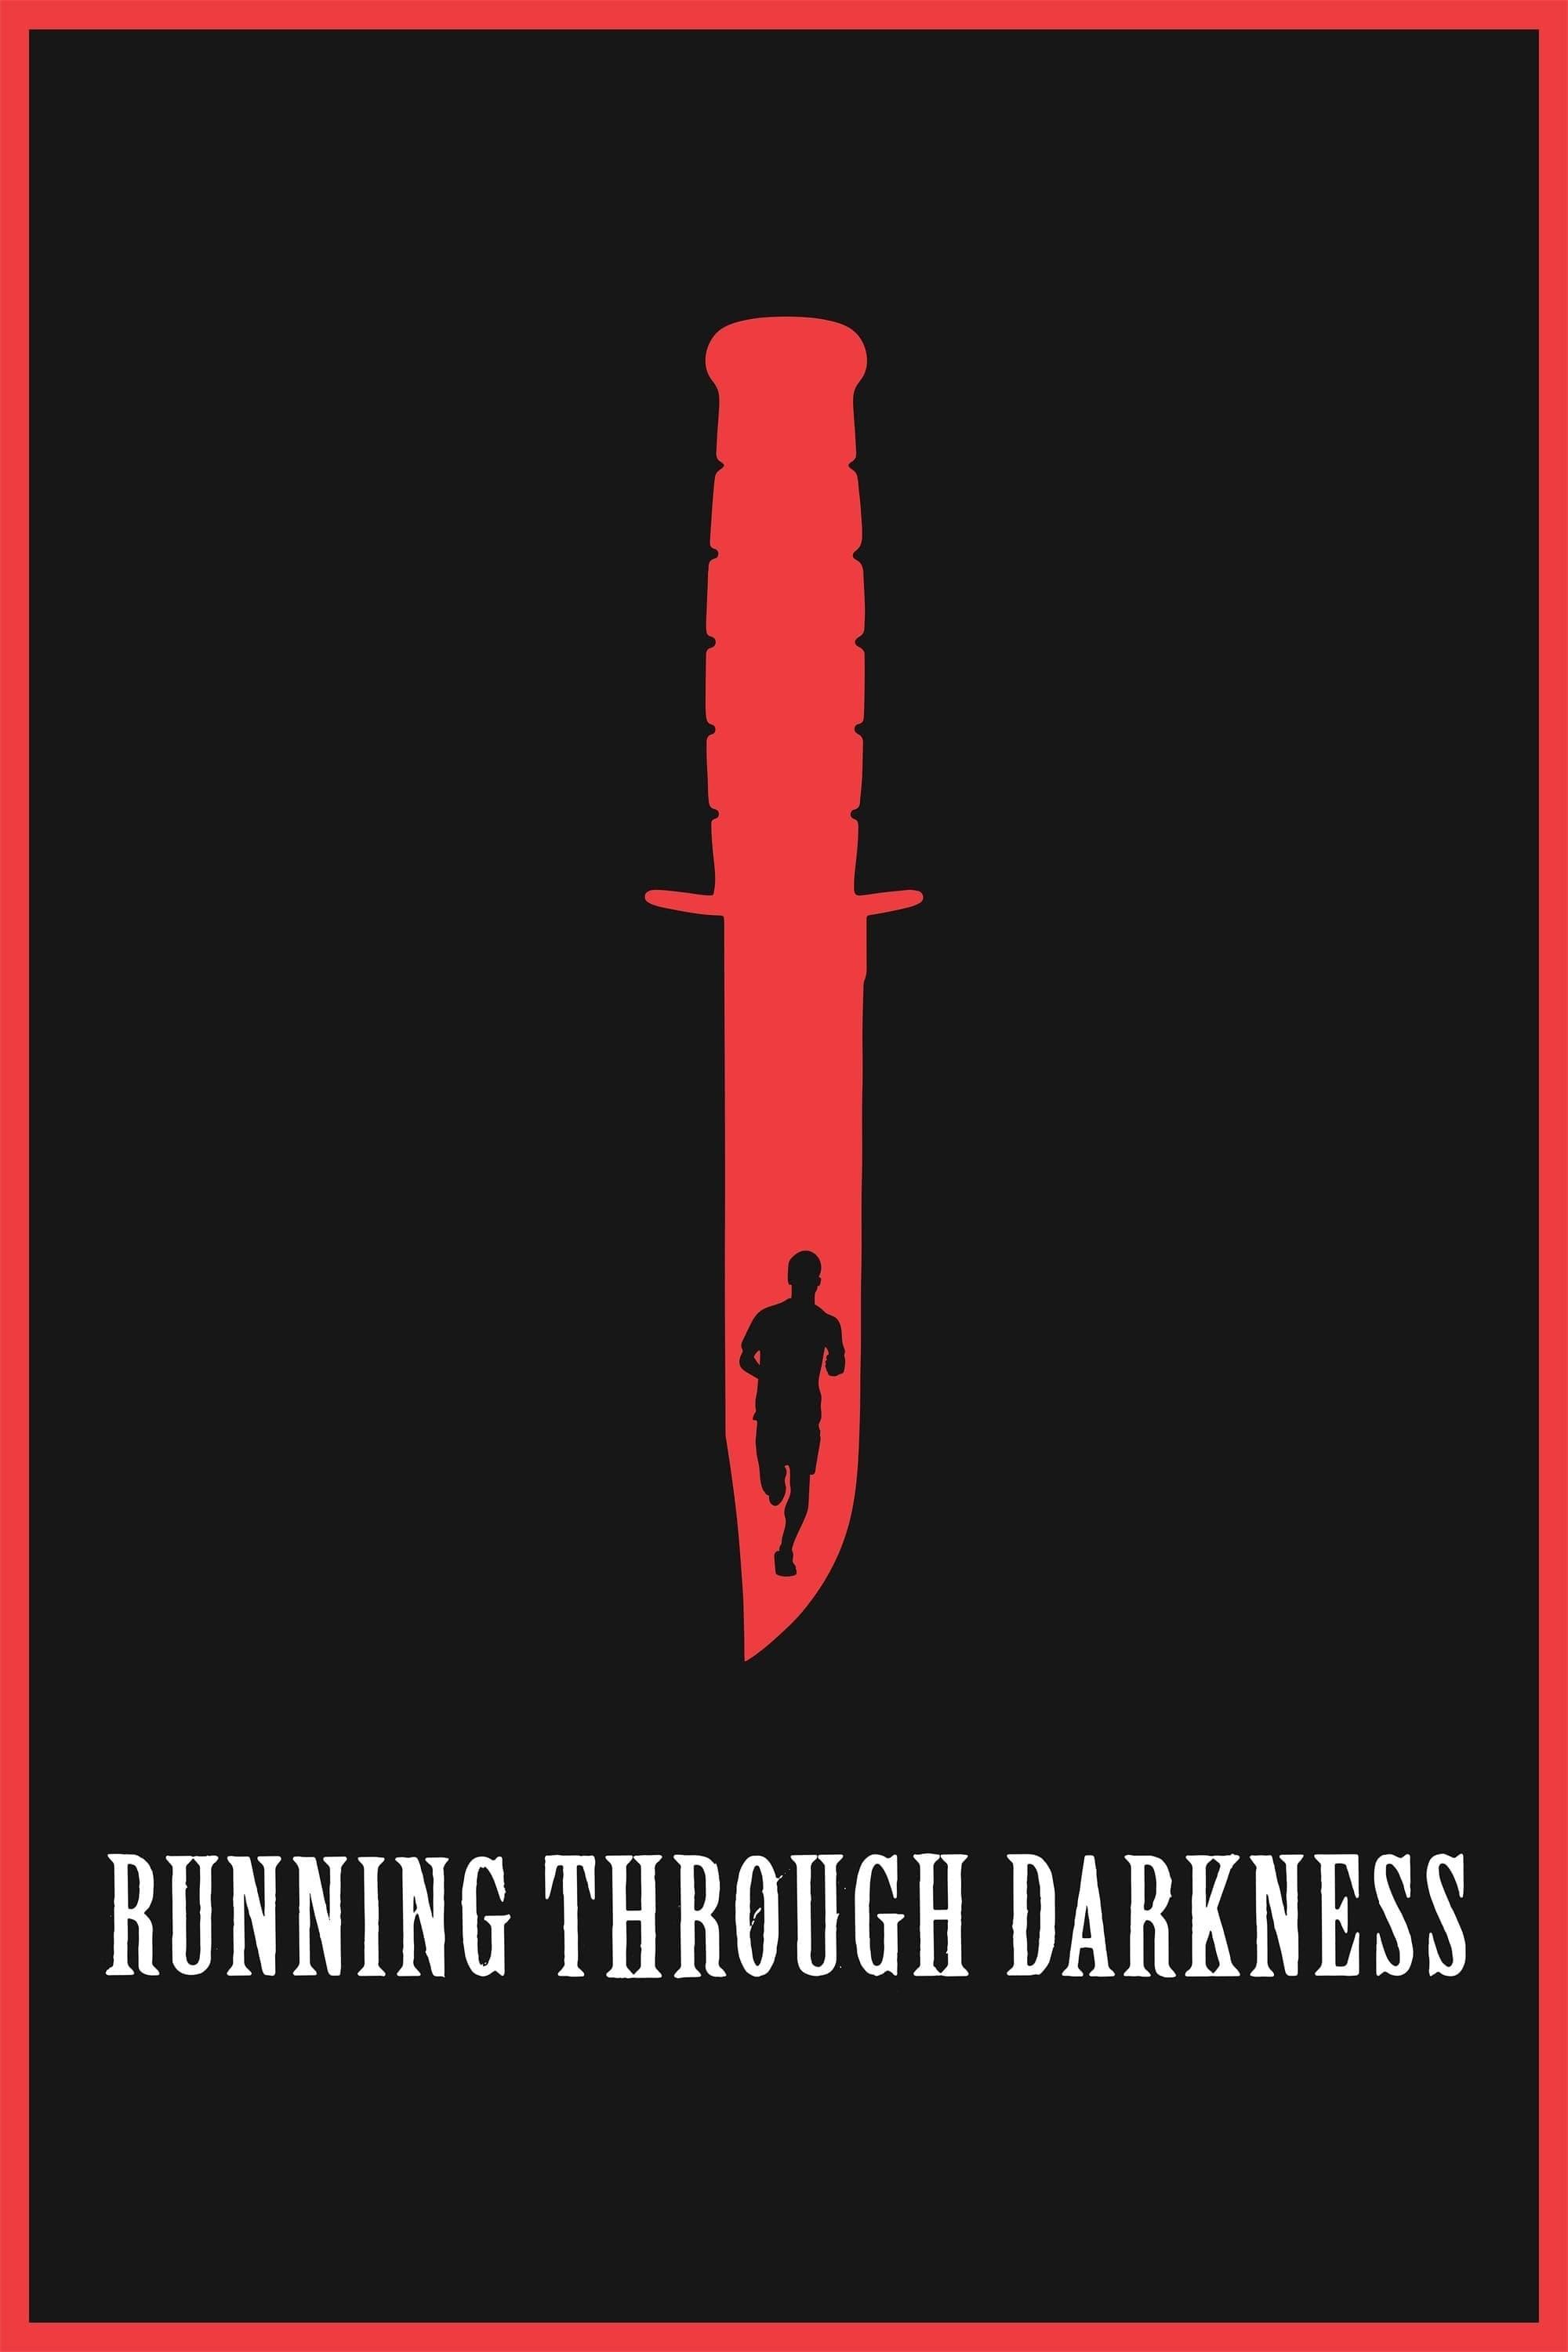 Running Through Darkness poster